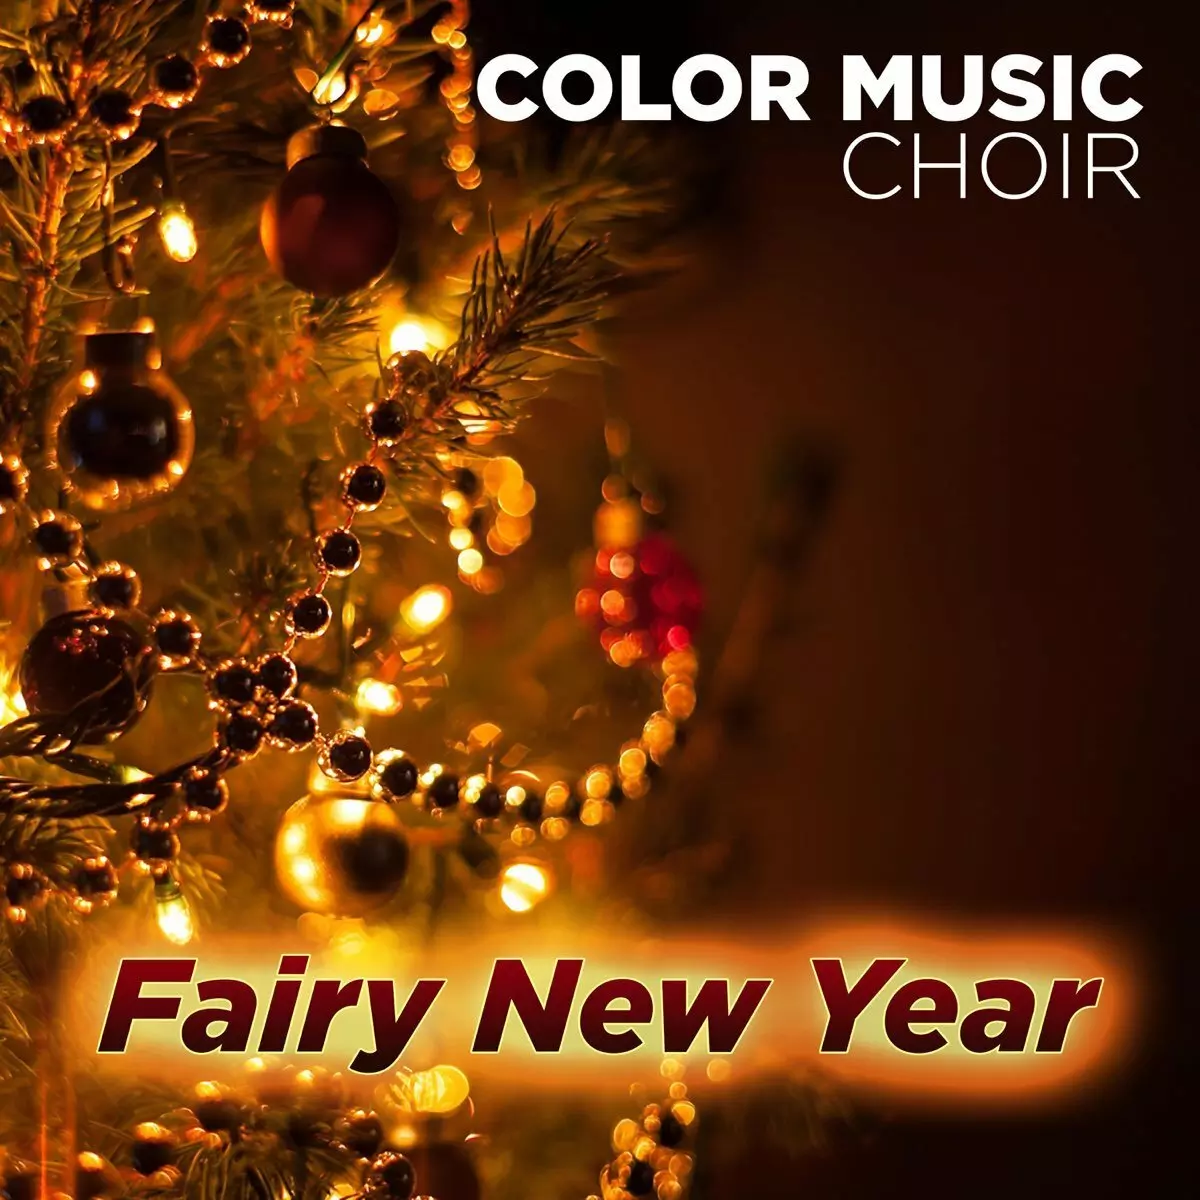 Fairy New Year - Single by Color Music Choir on Apple Music